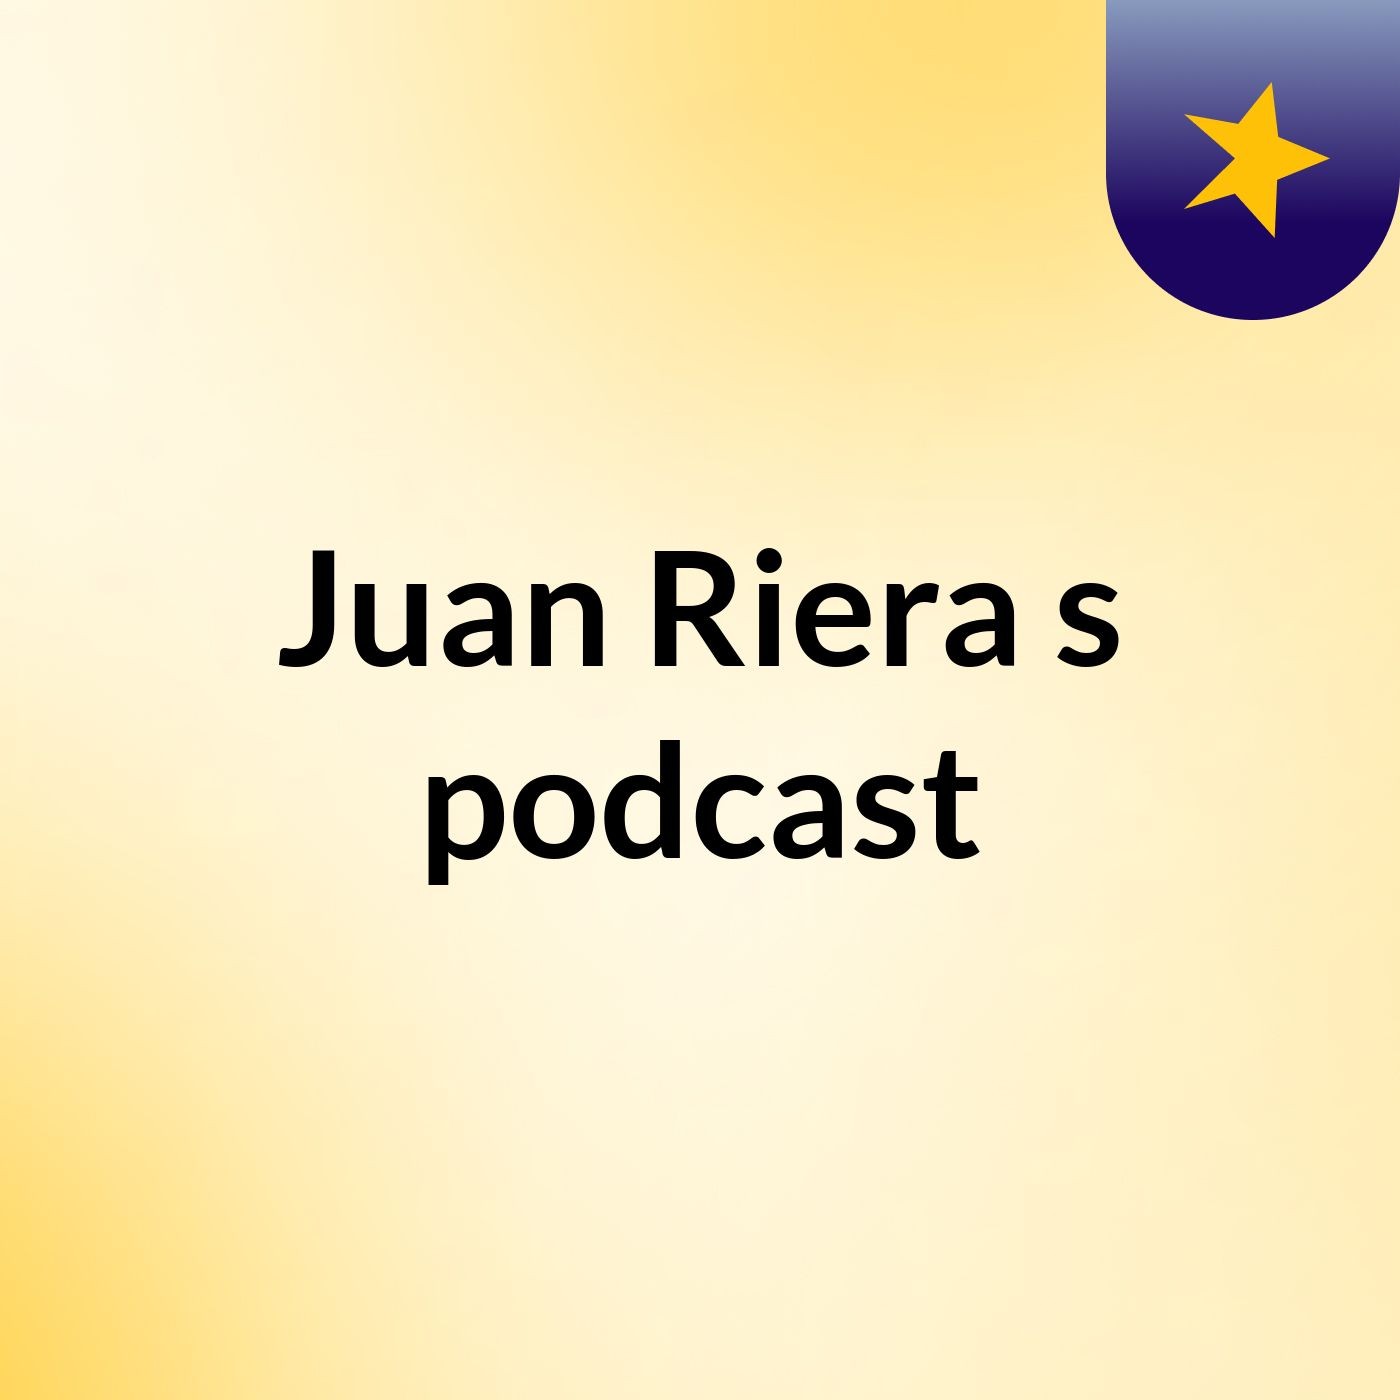 Juan Riera's podcast